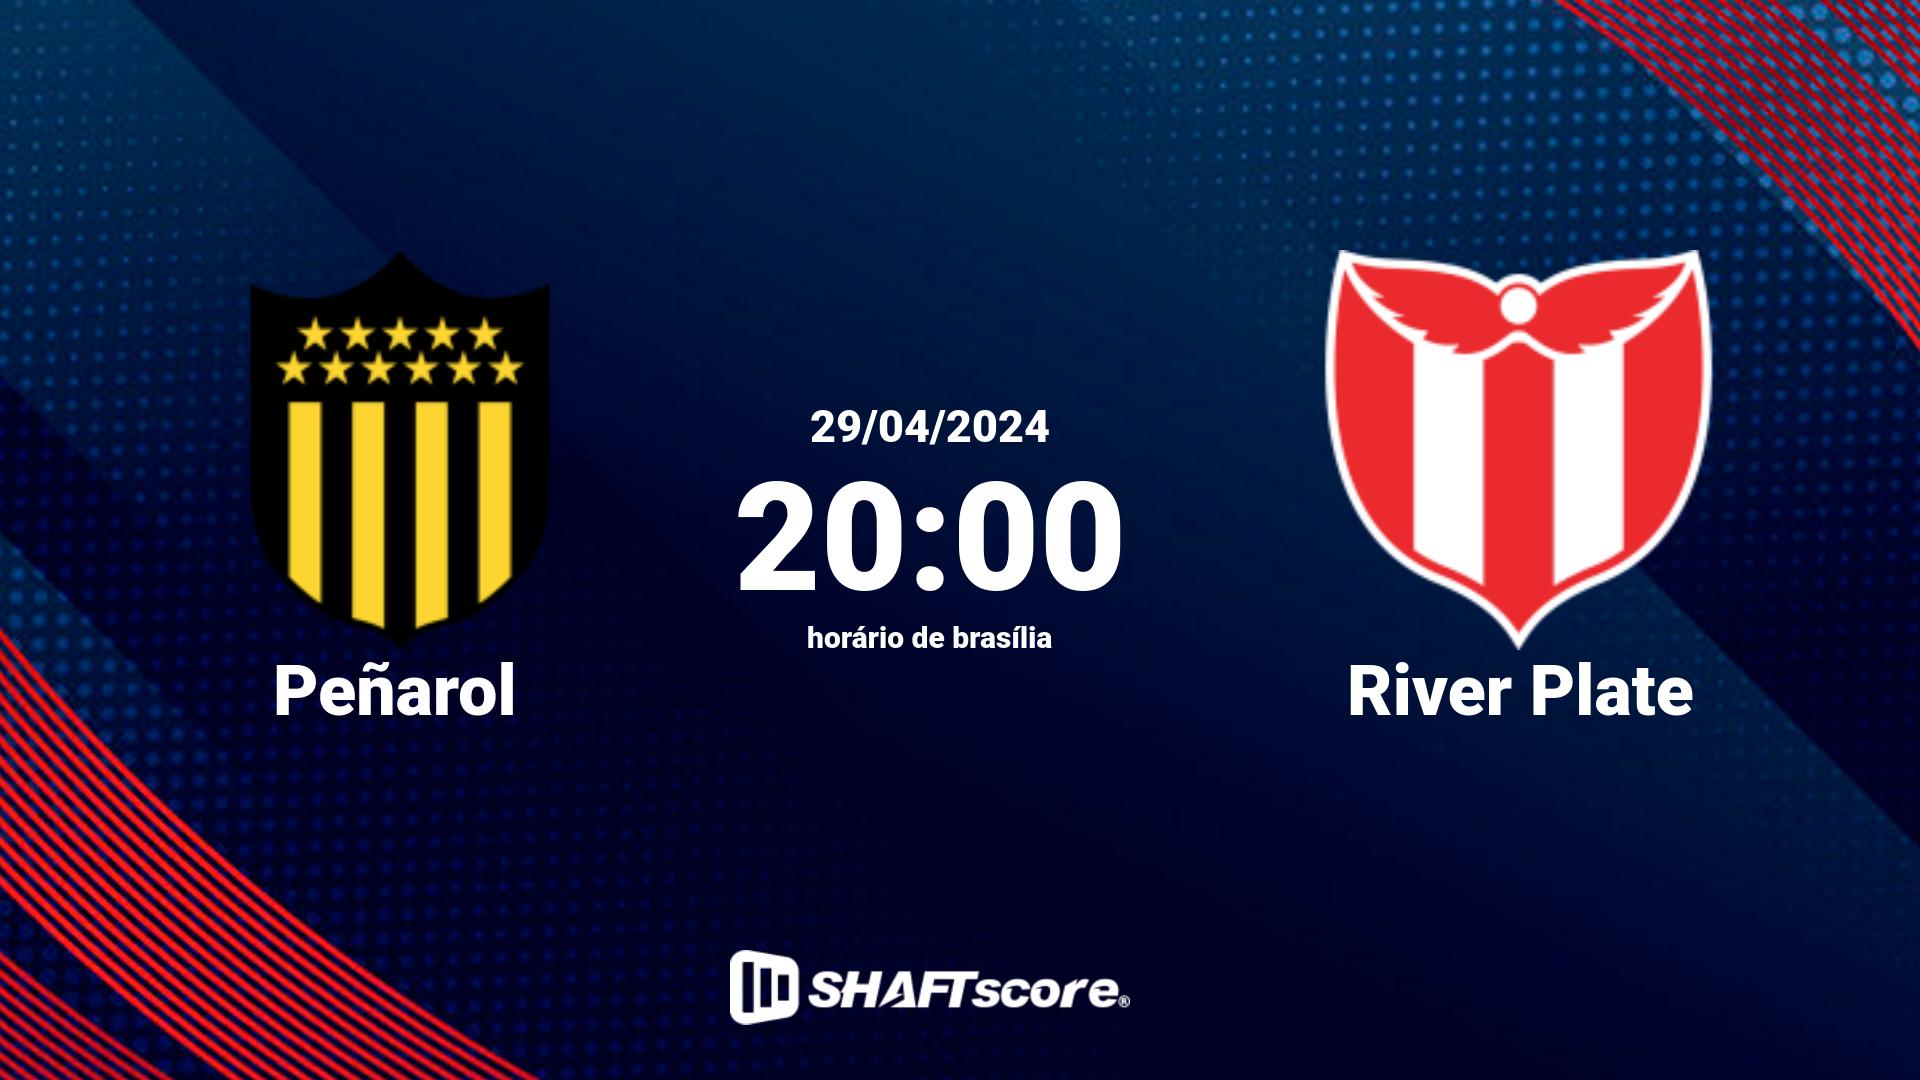 Estatísticas do jogo Peñarol vs River Plate 29.04 20:00